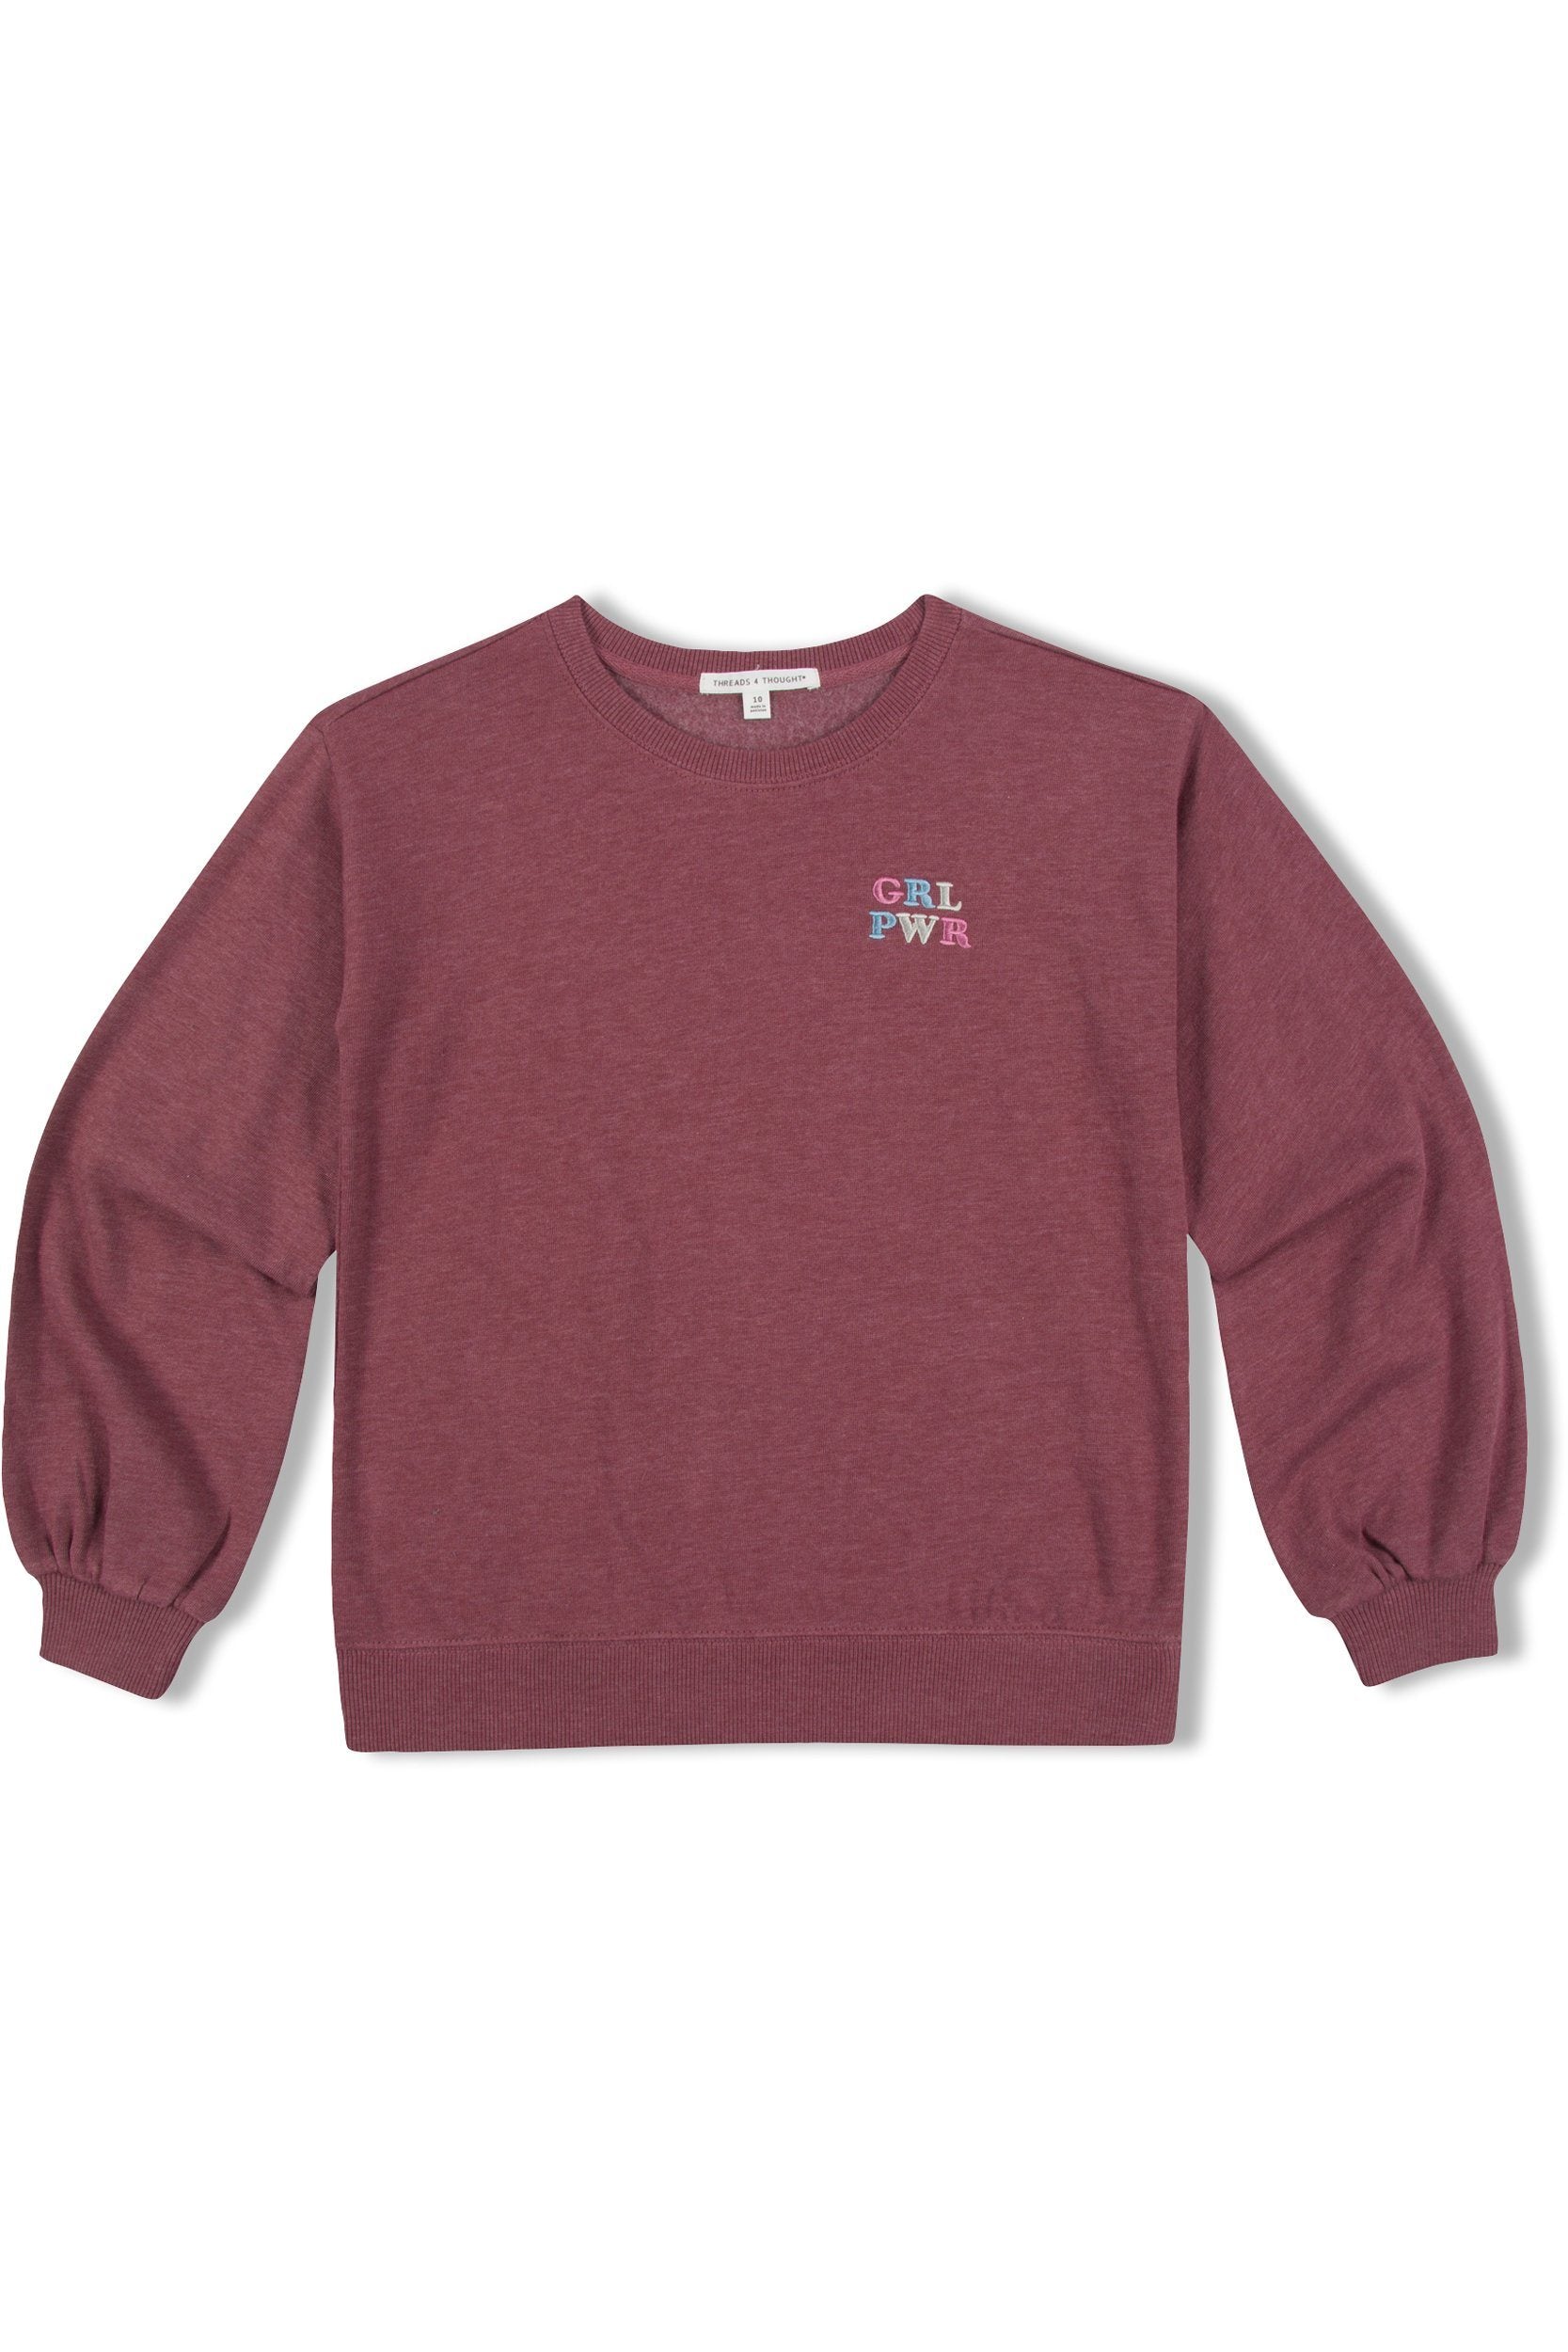 Girl’s Samira Girl Power Embroidered Sweatshirt Girls Outerwear Sweatshirts Threads 4 Thought 